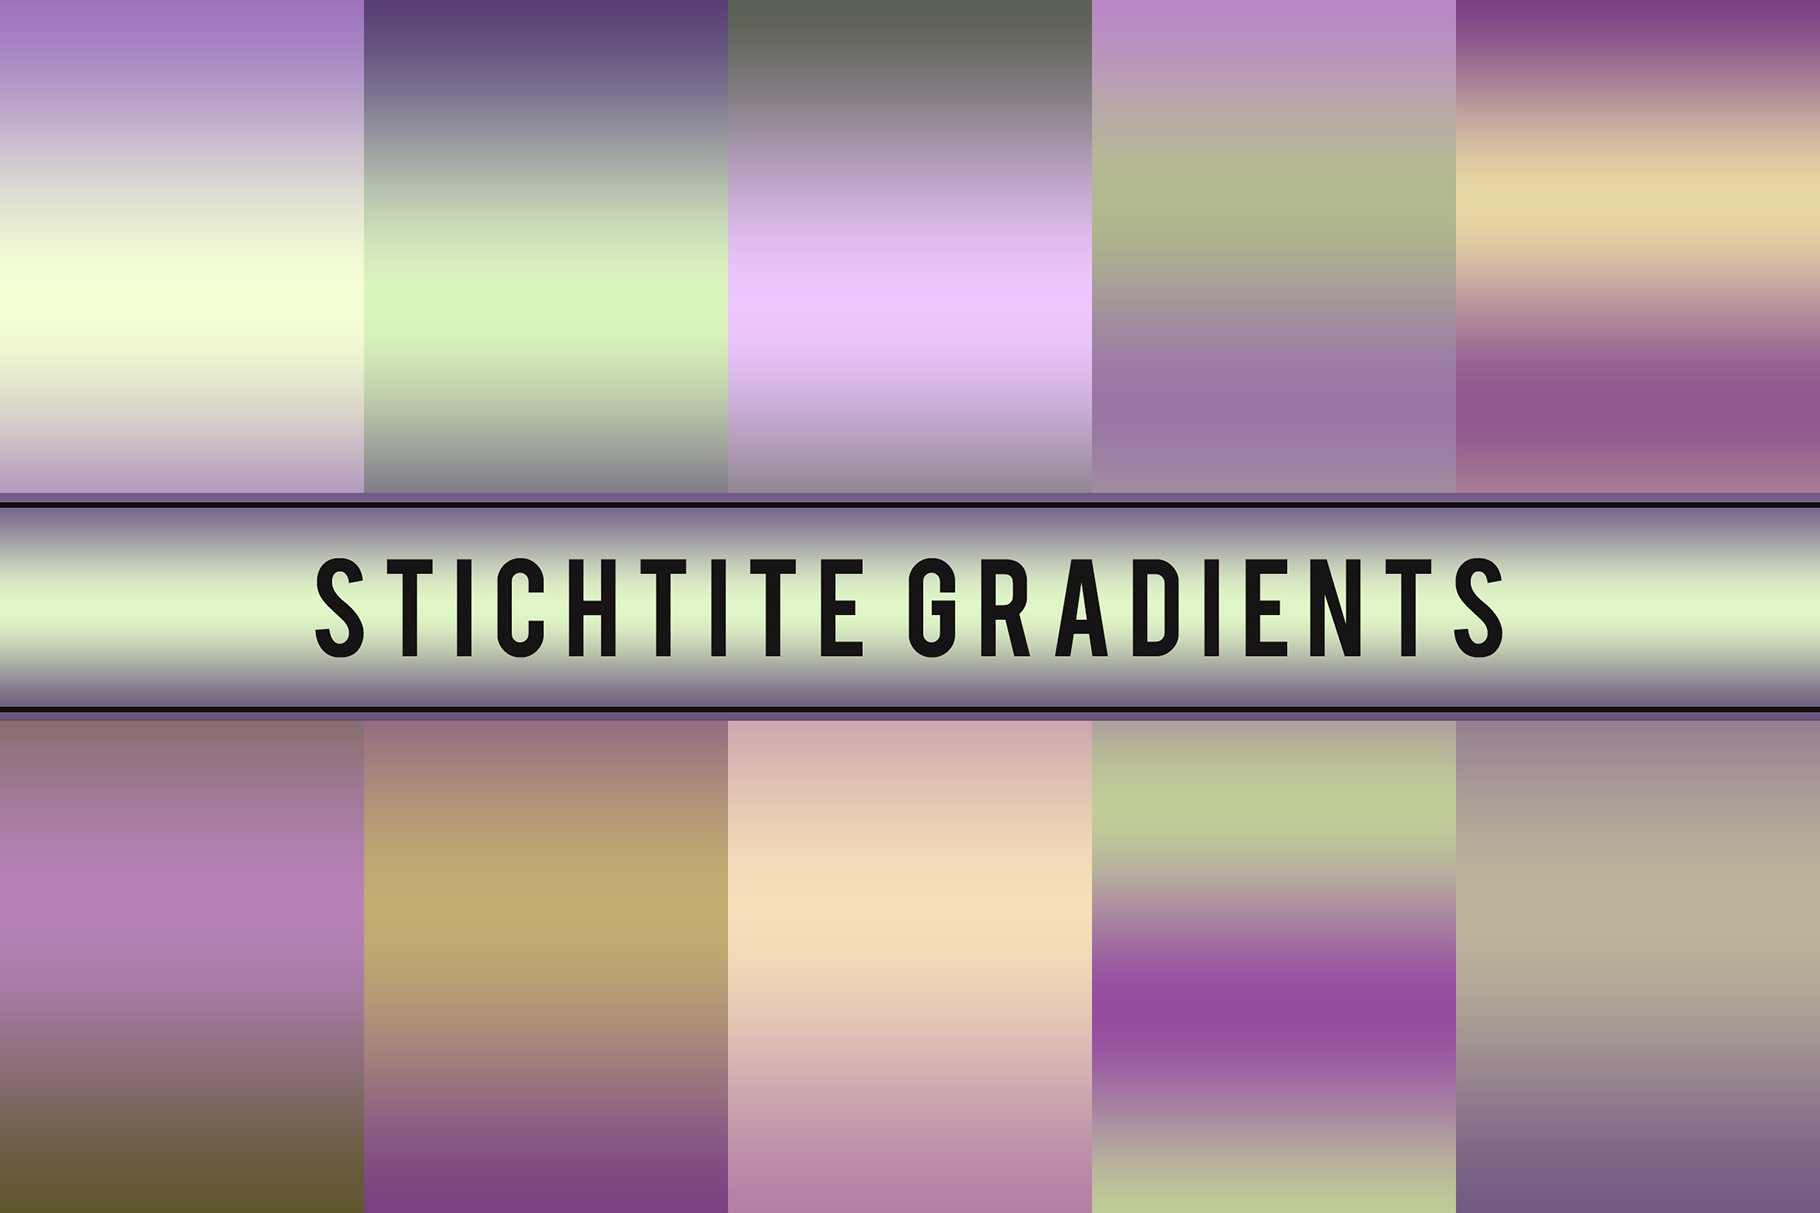 Stichtite Gradients cover image.